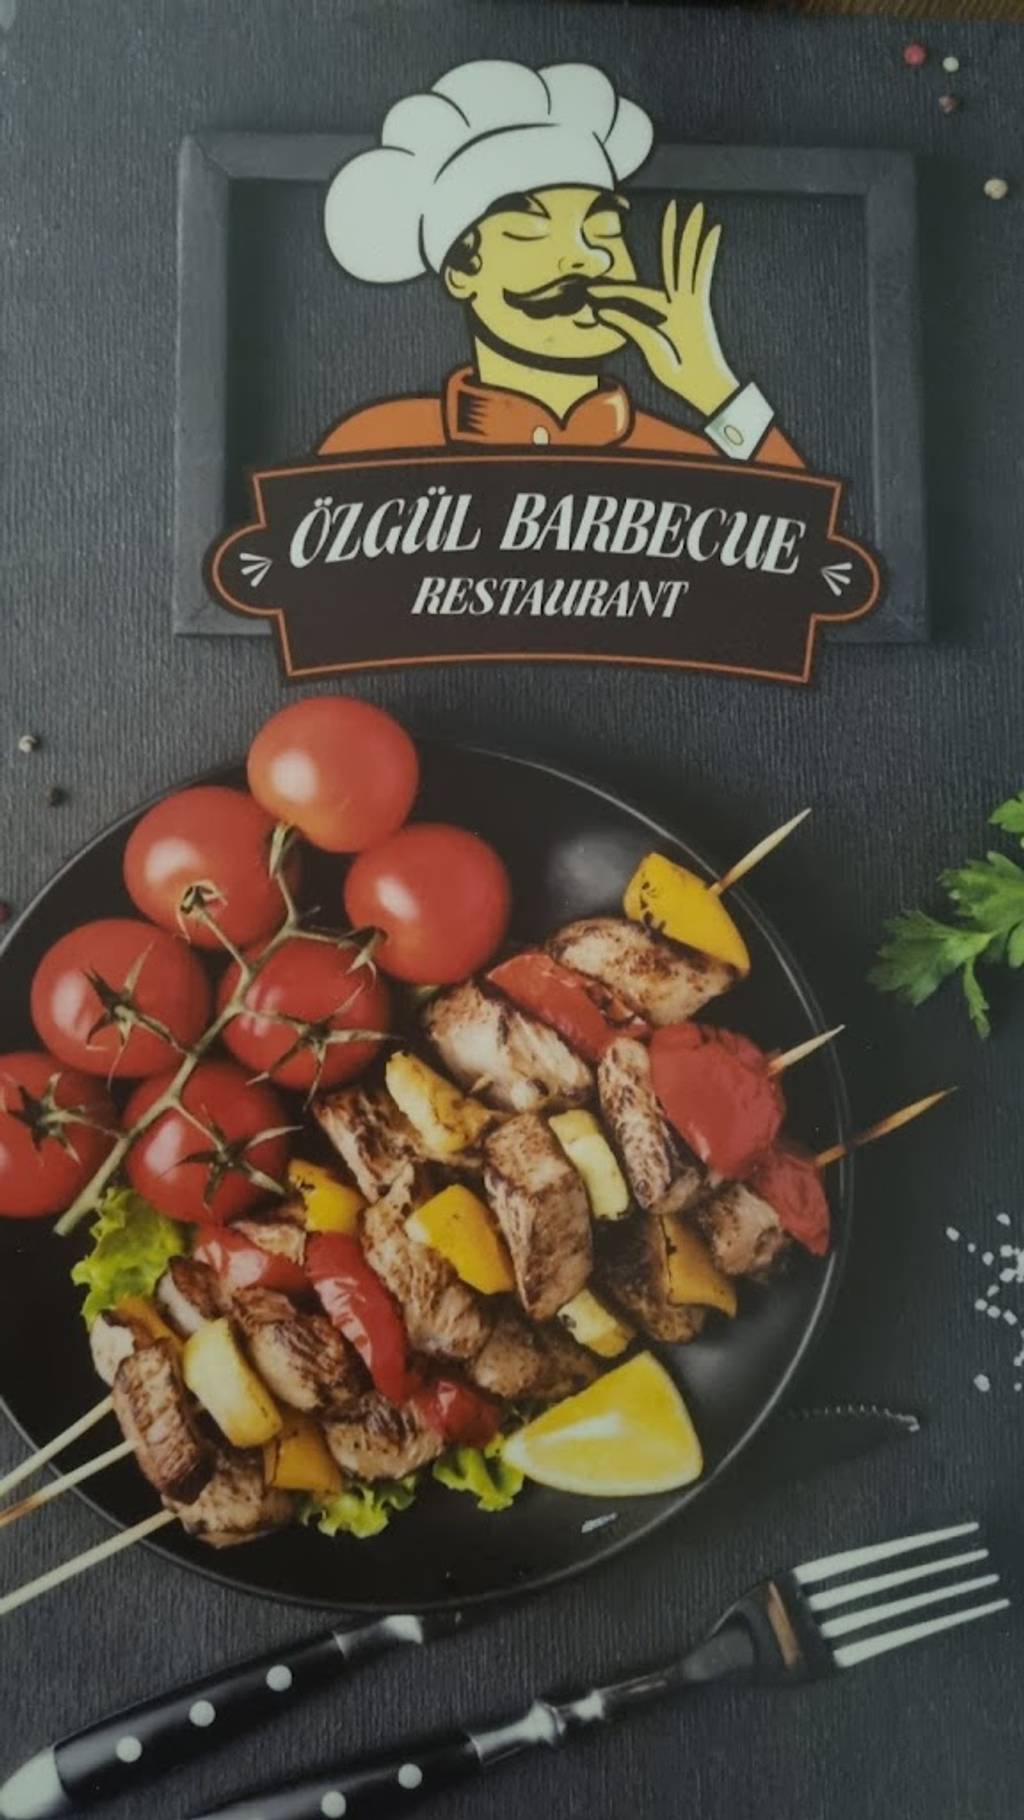 özgül barbecue Le Mans - Food Brochette Tableware Ingredient Recipe